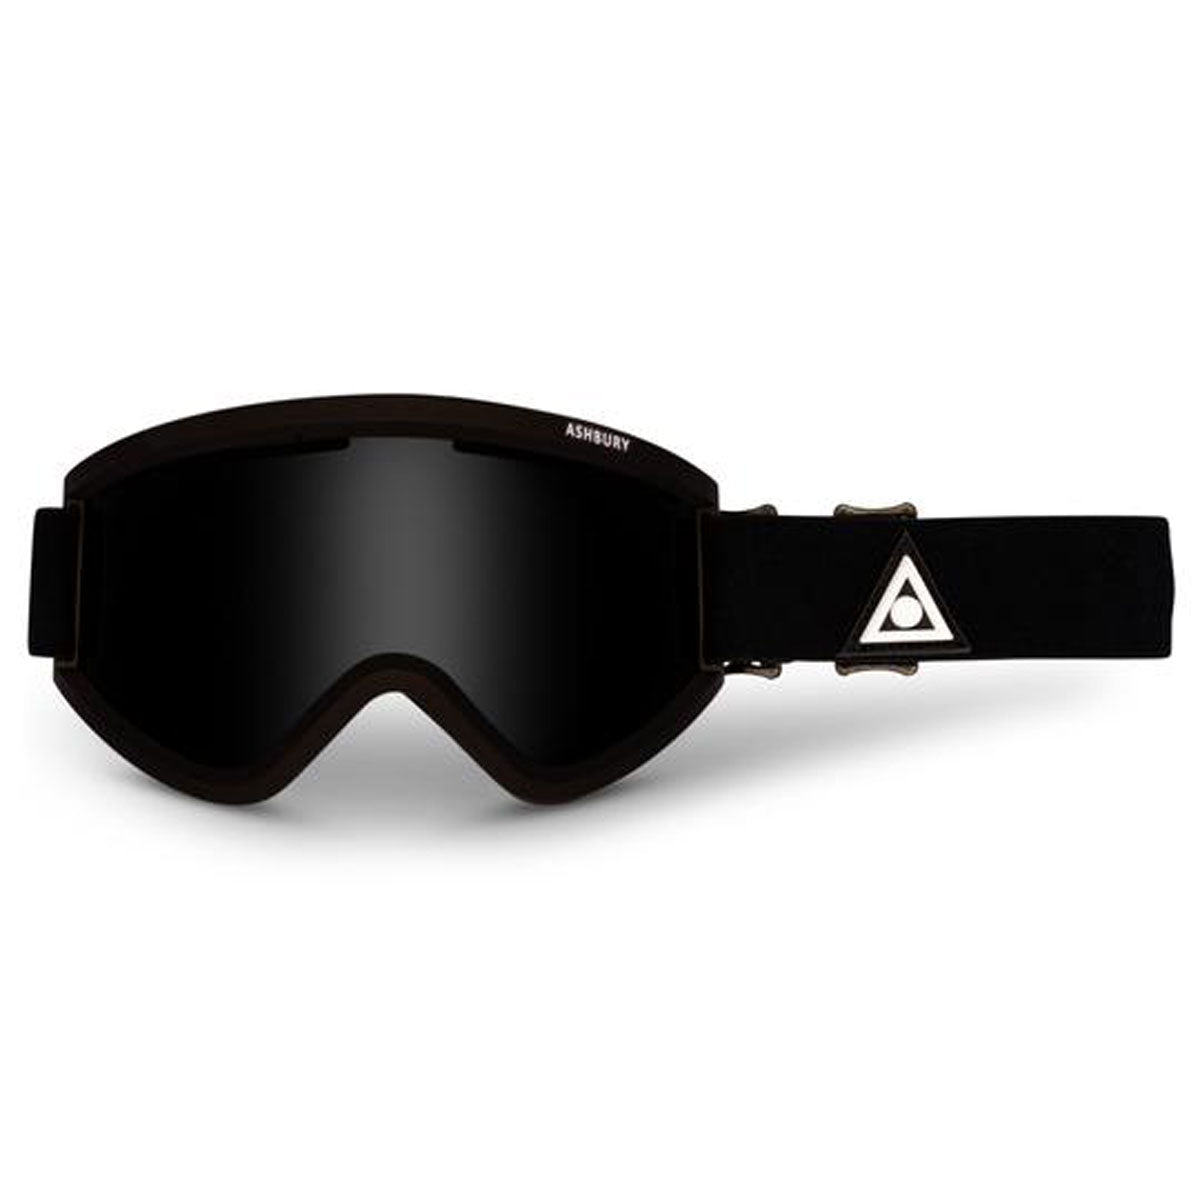 Ashbury Blackbird Black Triangle Snowboard Goggles - Dark Smoke/Yellow Spare image 1